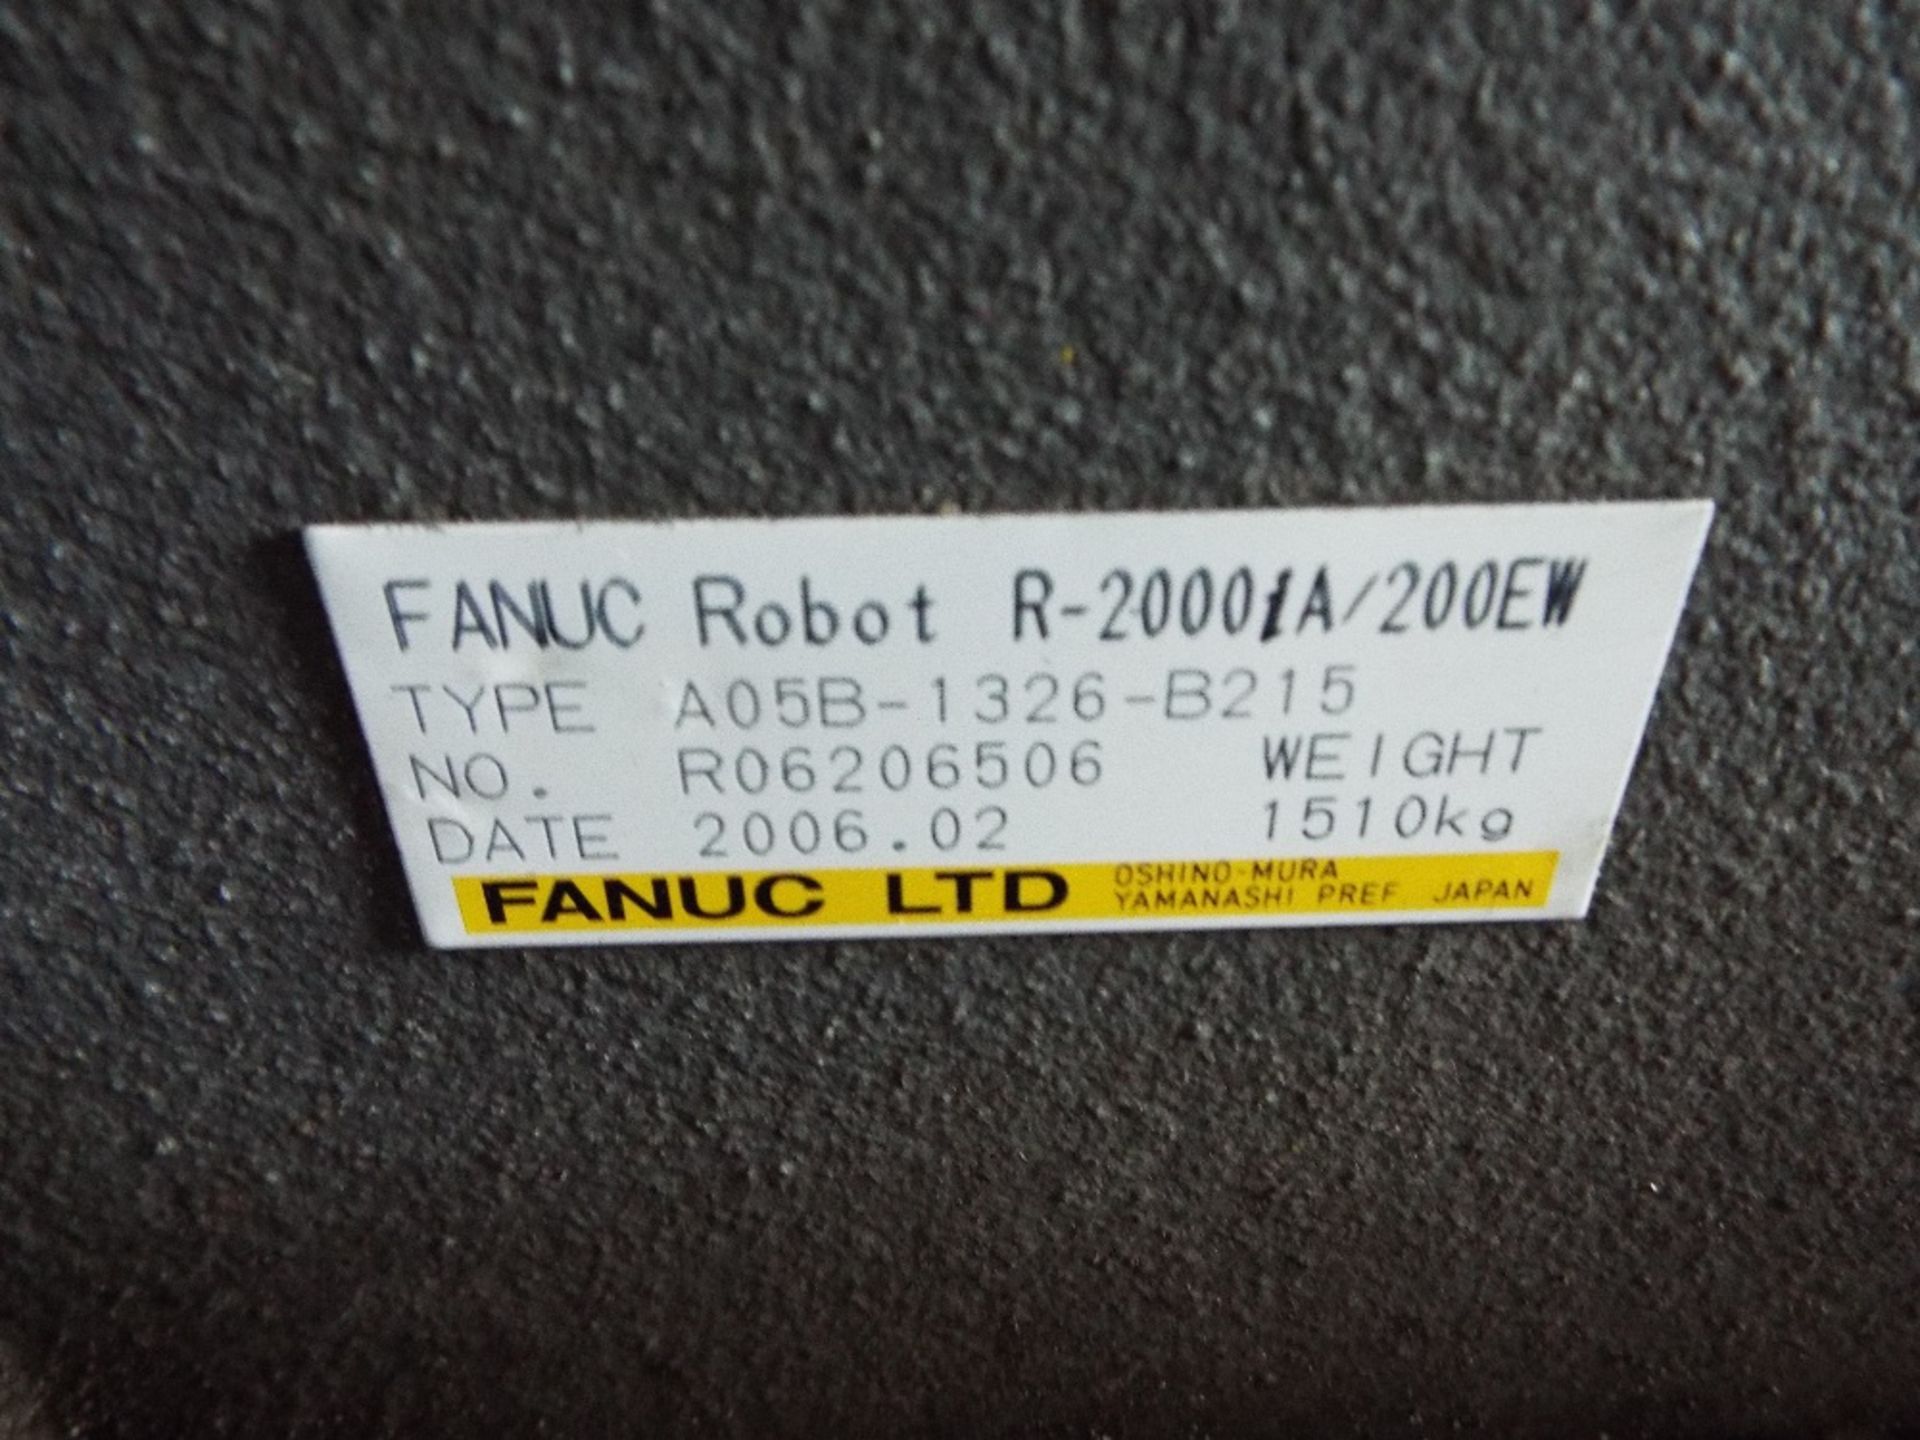 Fanuc Robot Type R-2000iA - 200EW - Image 6 of 9